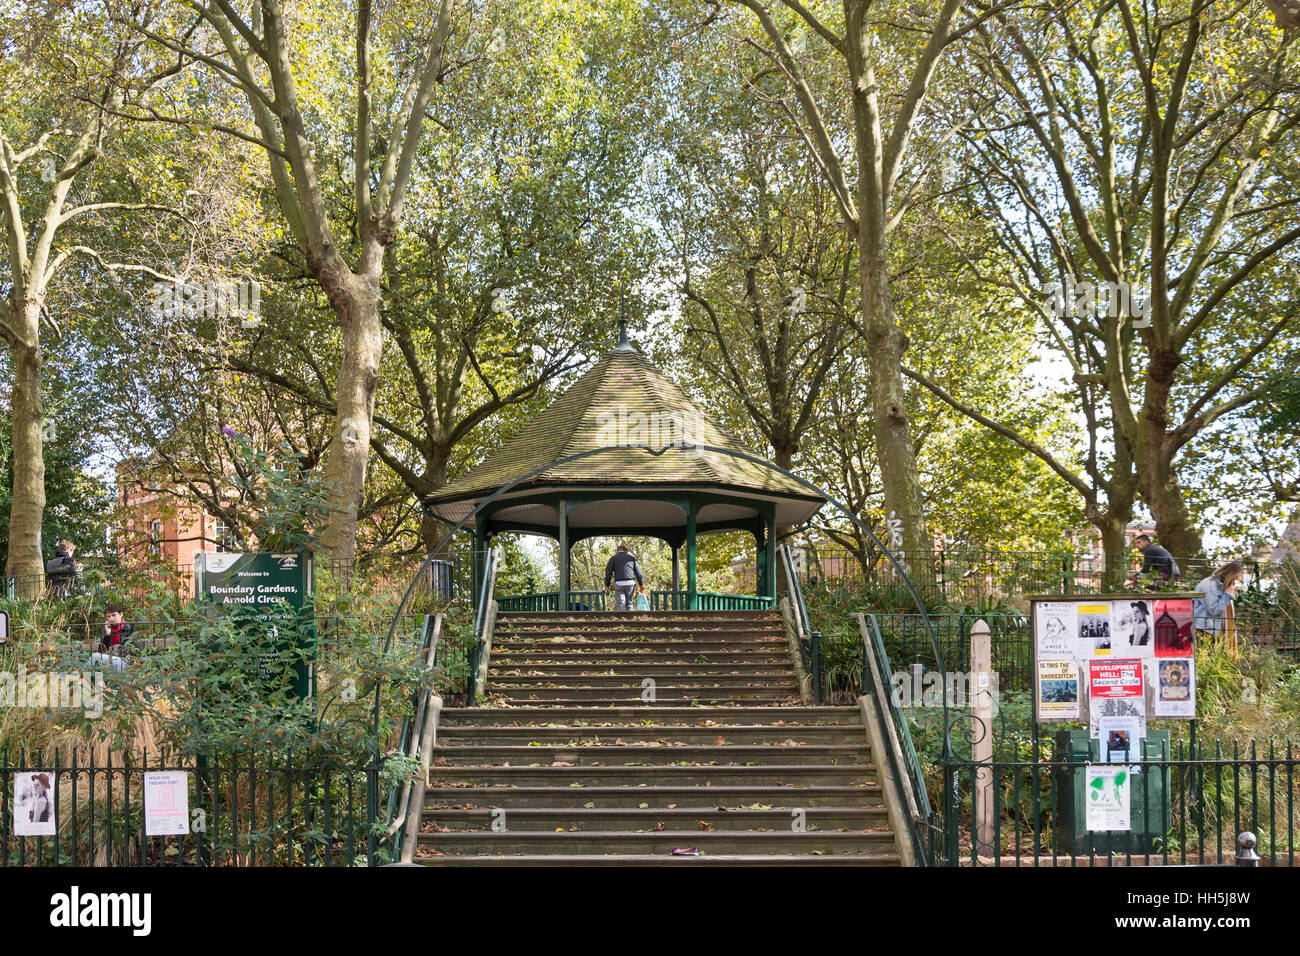 Grenze-Gärten, Arnold Circus, Shoreditch, London Borough of Hackney, Greater London, England, Vereinigtes Königreich Stockfoto